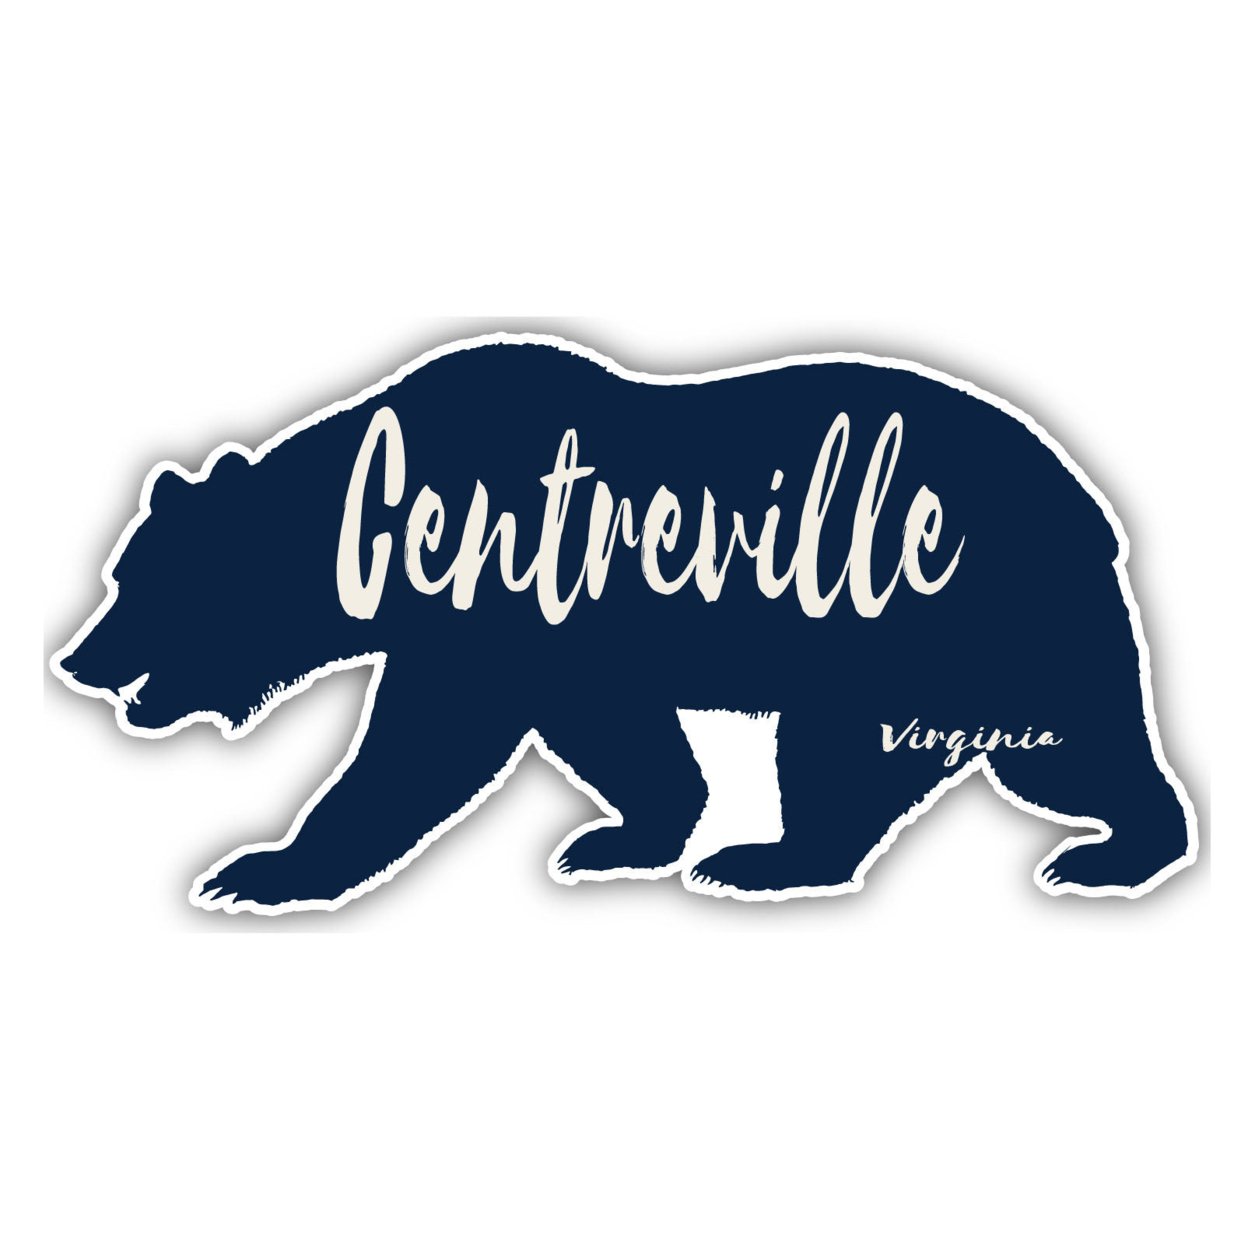 Centreville Virginia Souvenir Decorative Stickers (Choose Theme And Size) - Single Unit, 10-Inch, Bear